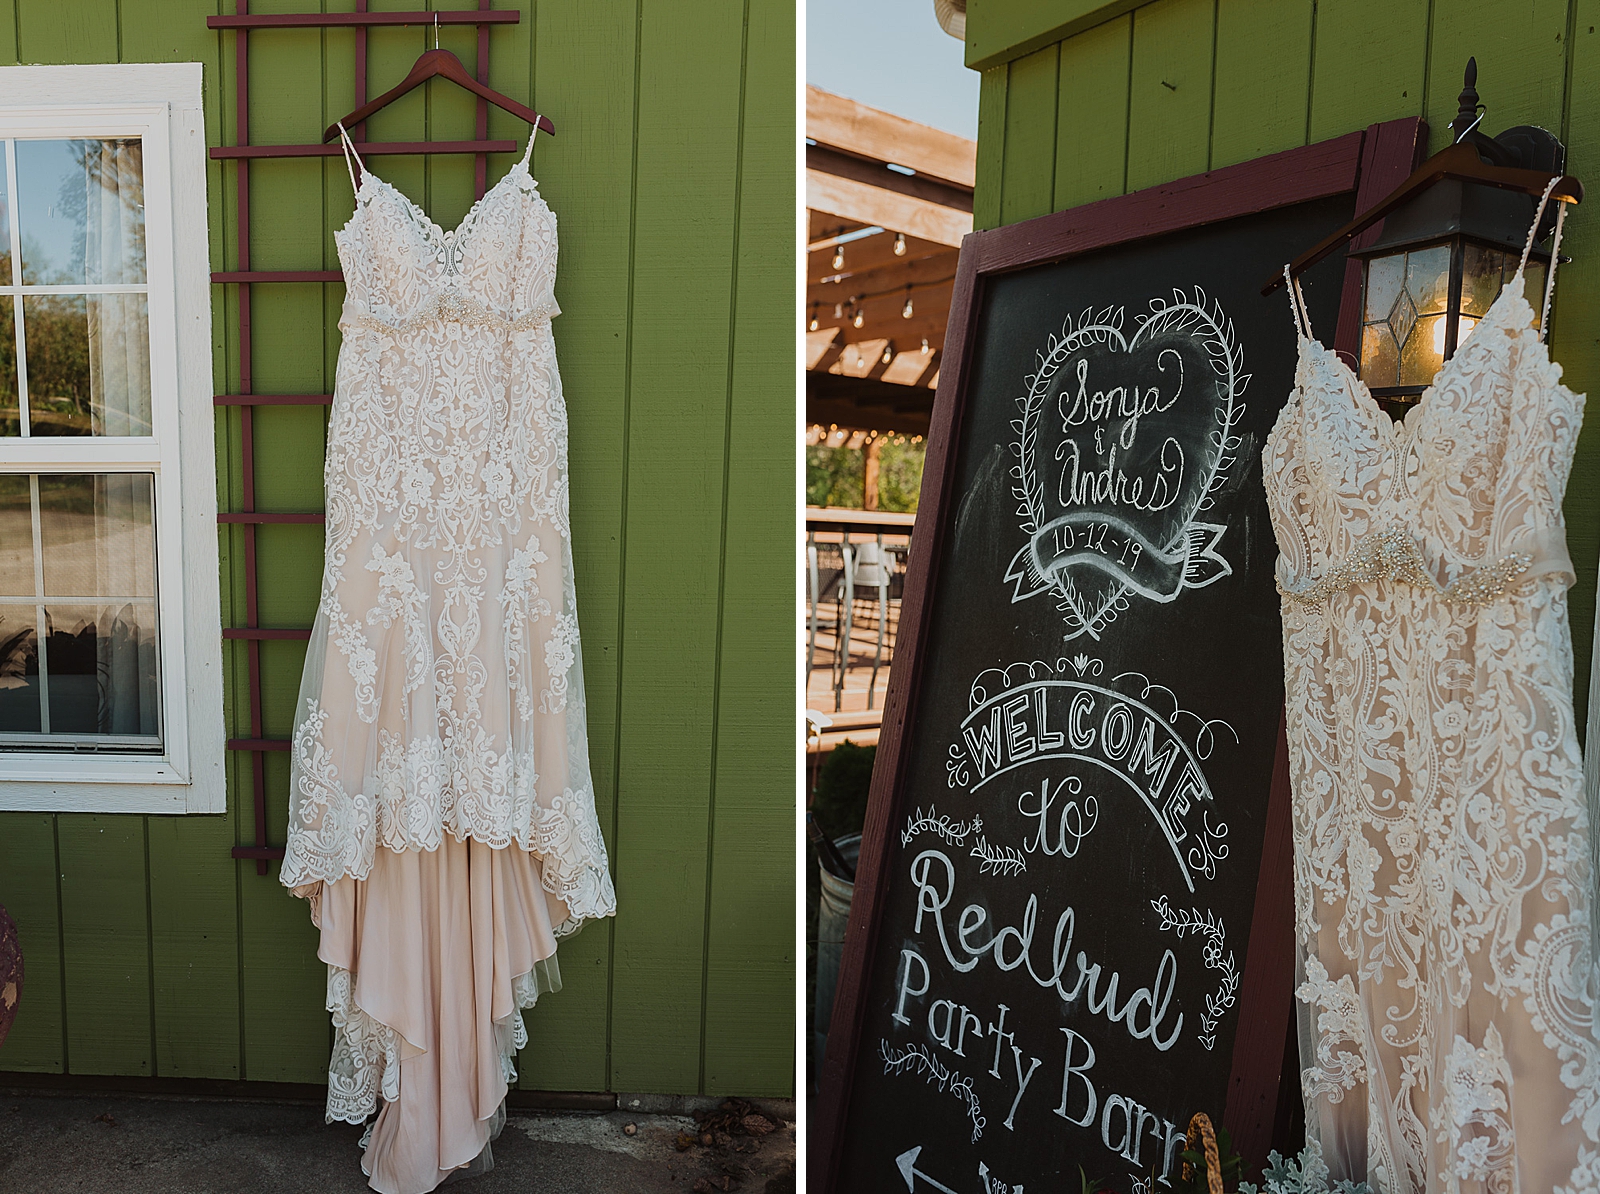 Redbud Party Barn Wichita Wedding Photos by Caitlyn Cloud Photography